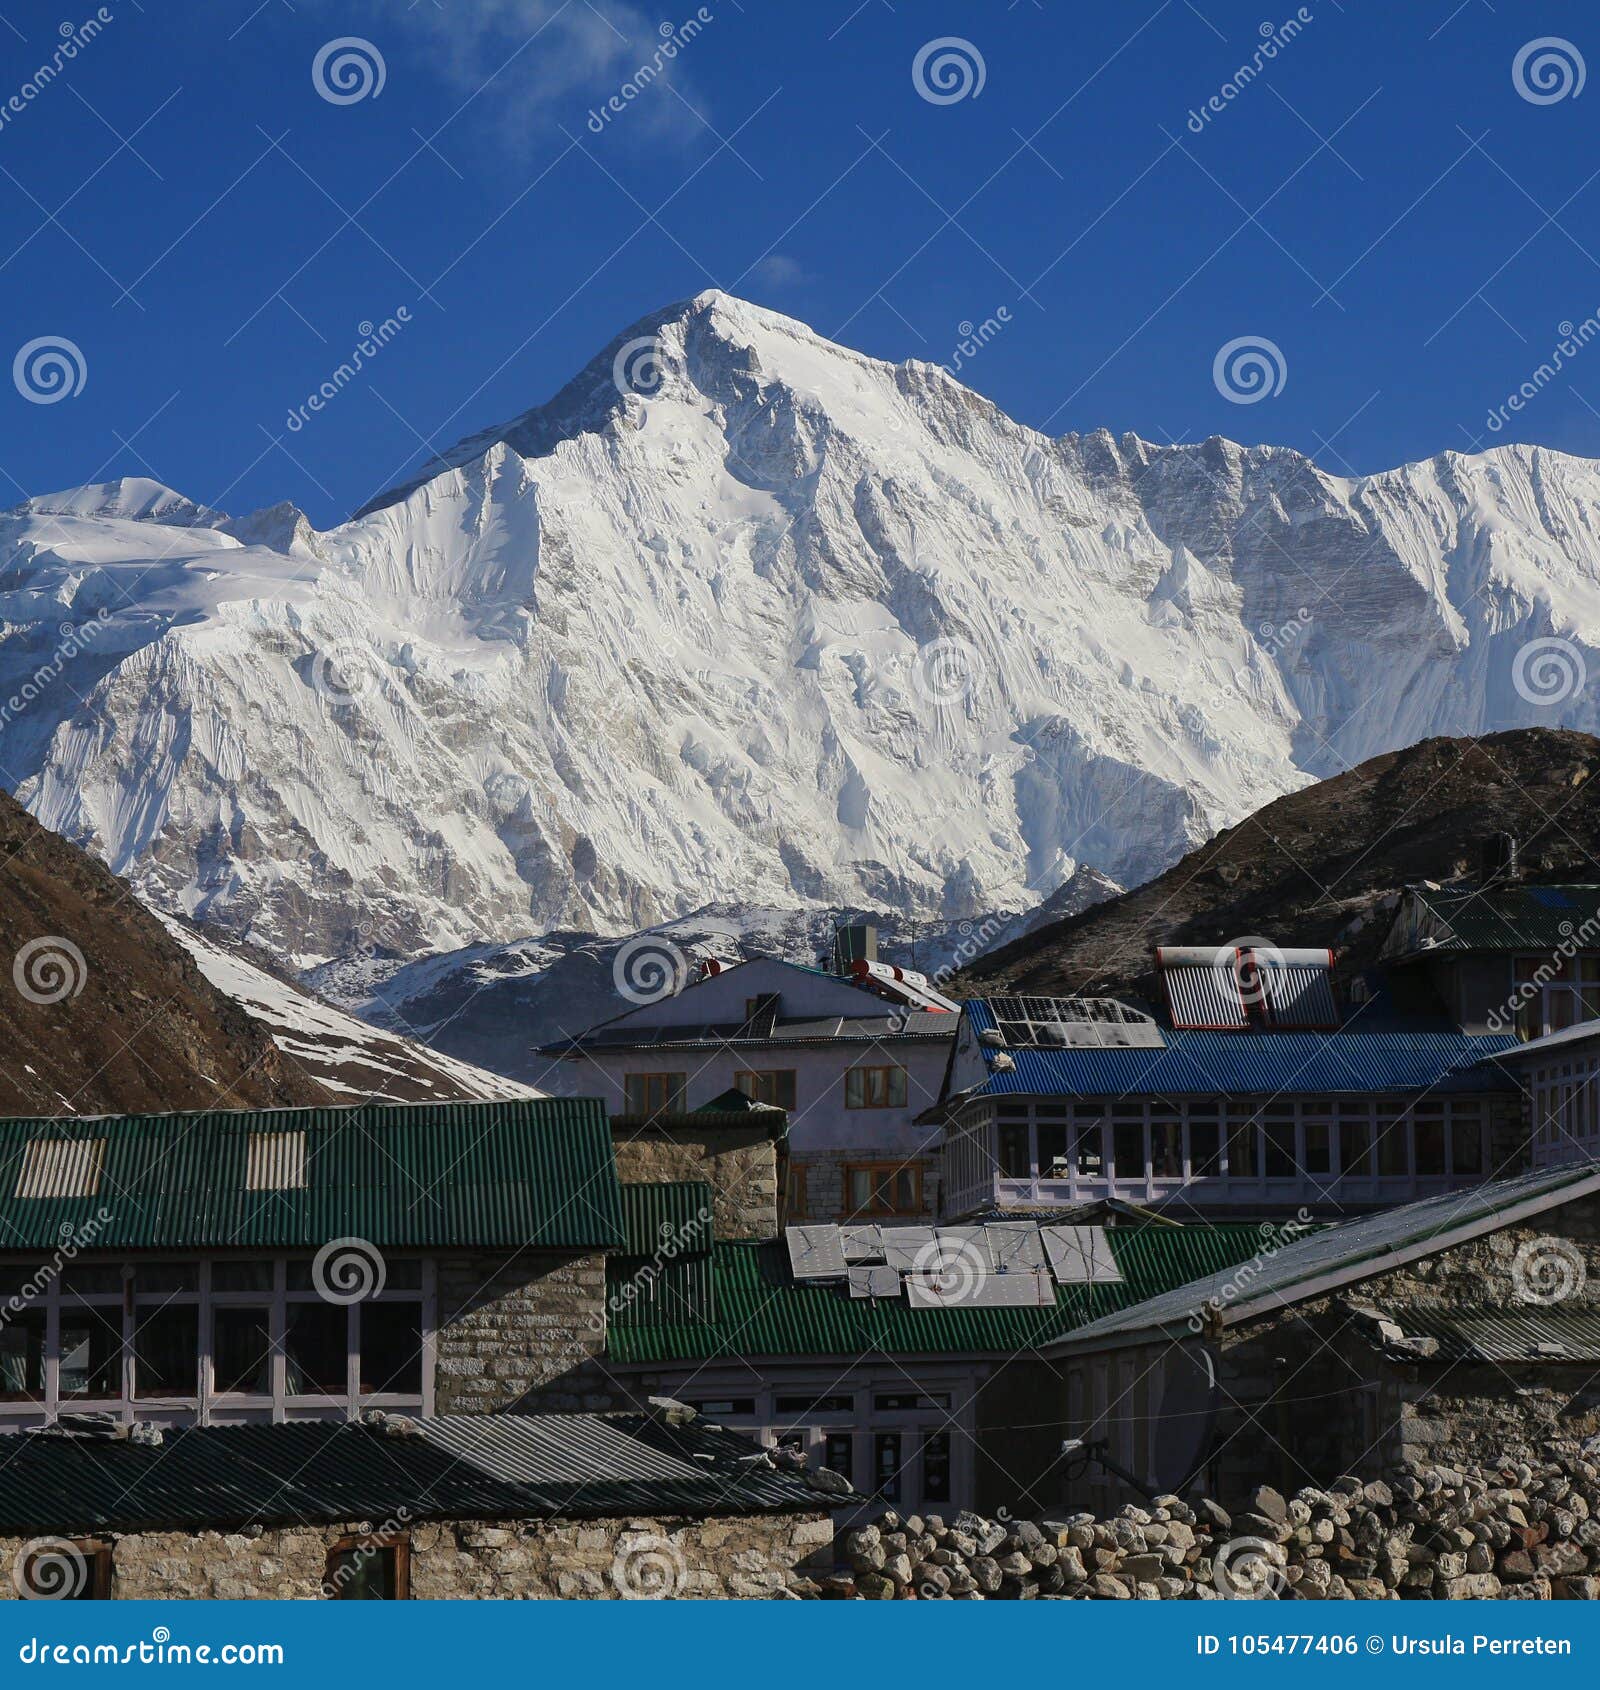 village gokyo and majestic mountain cho oyu, mount everest national park, nepal.